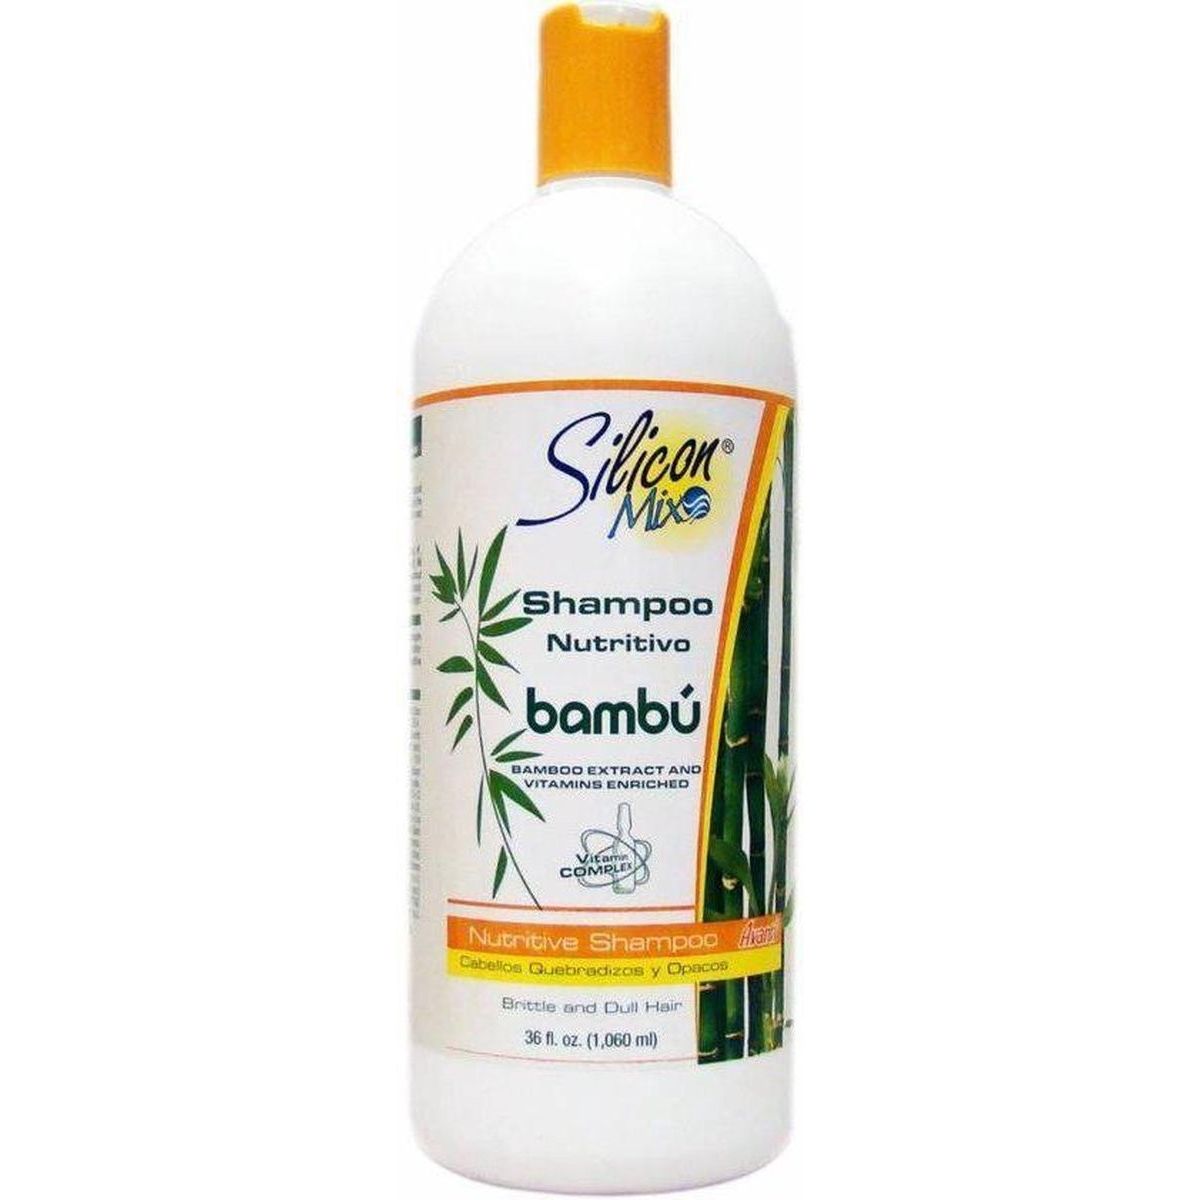 Silicon Mix Shampoo Nutrivio Bambu 36 fl.oz